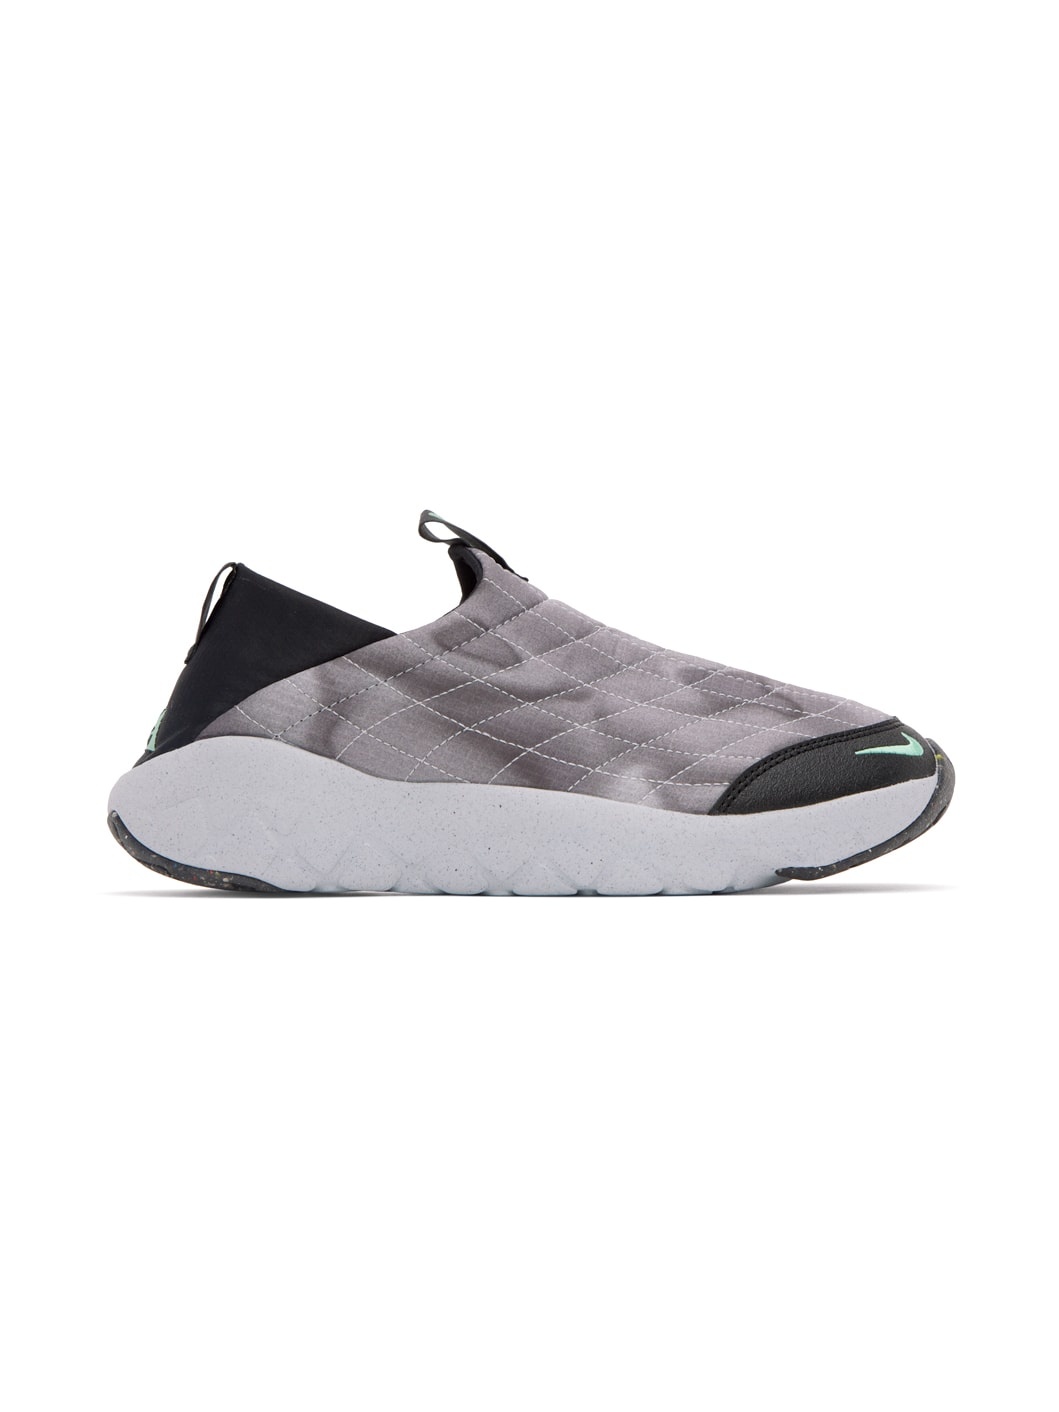 Gray & Black ACG Moc 3.5 Sneakers - 1